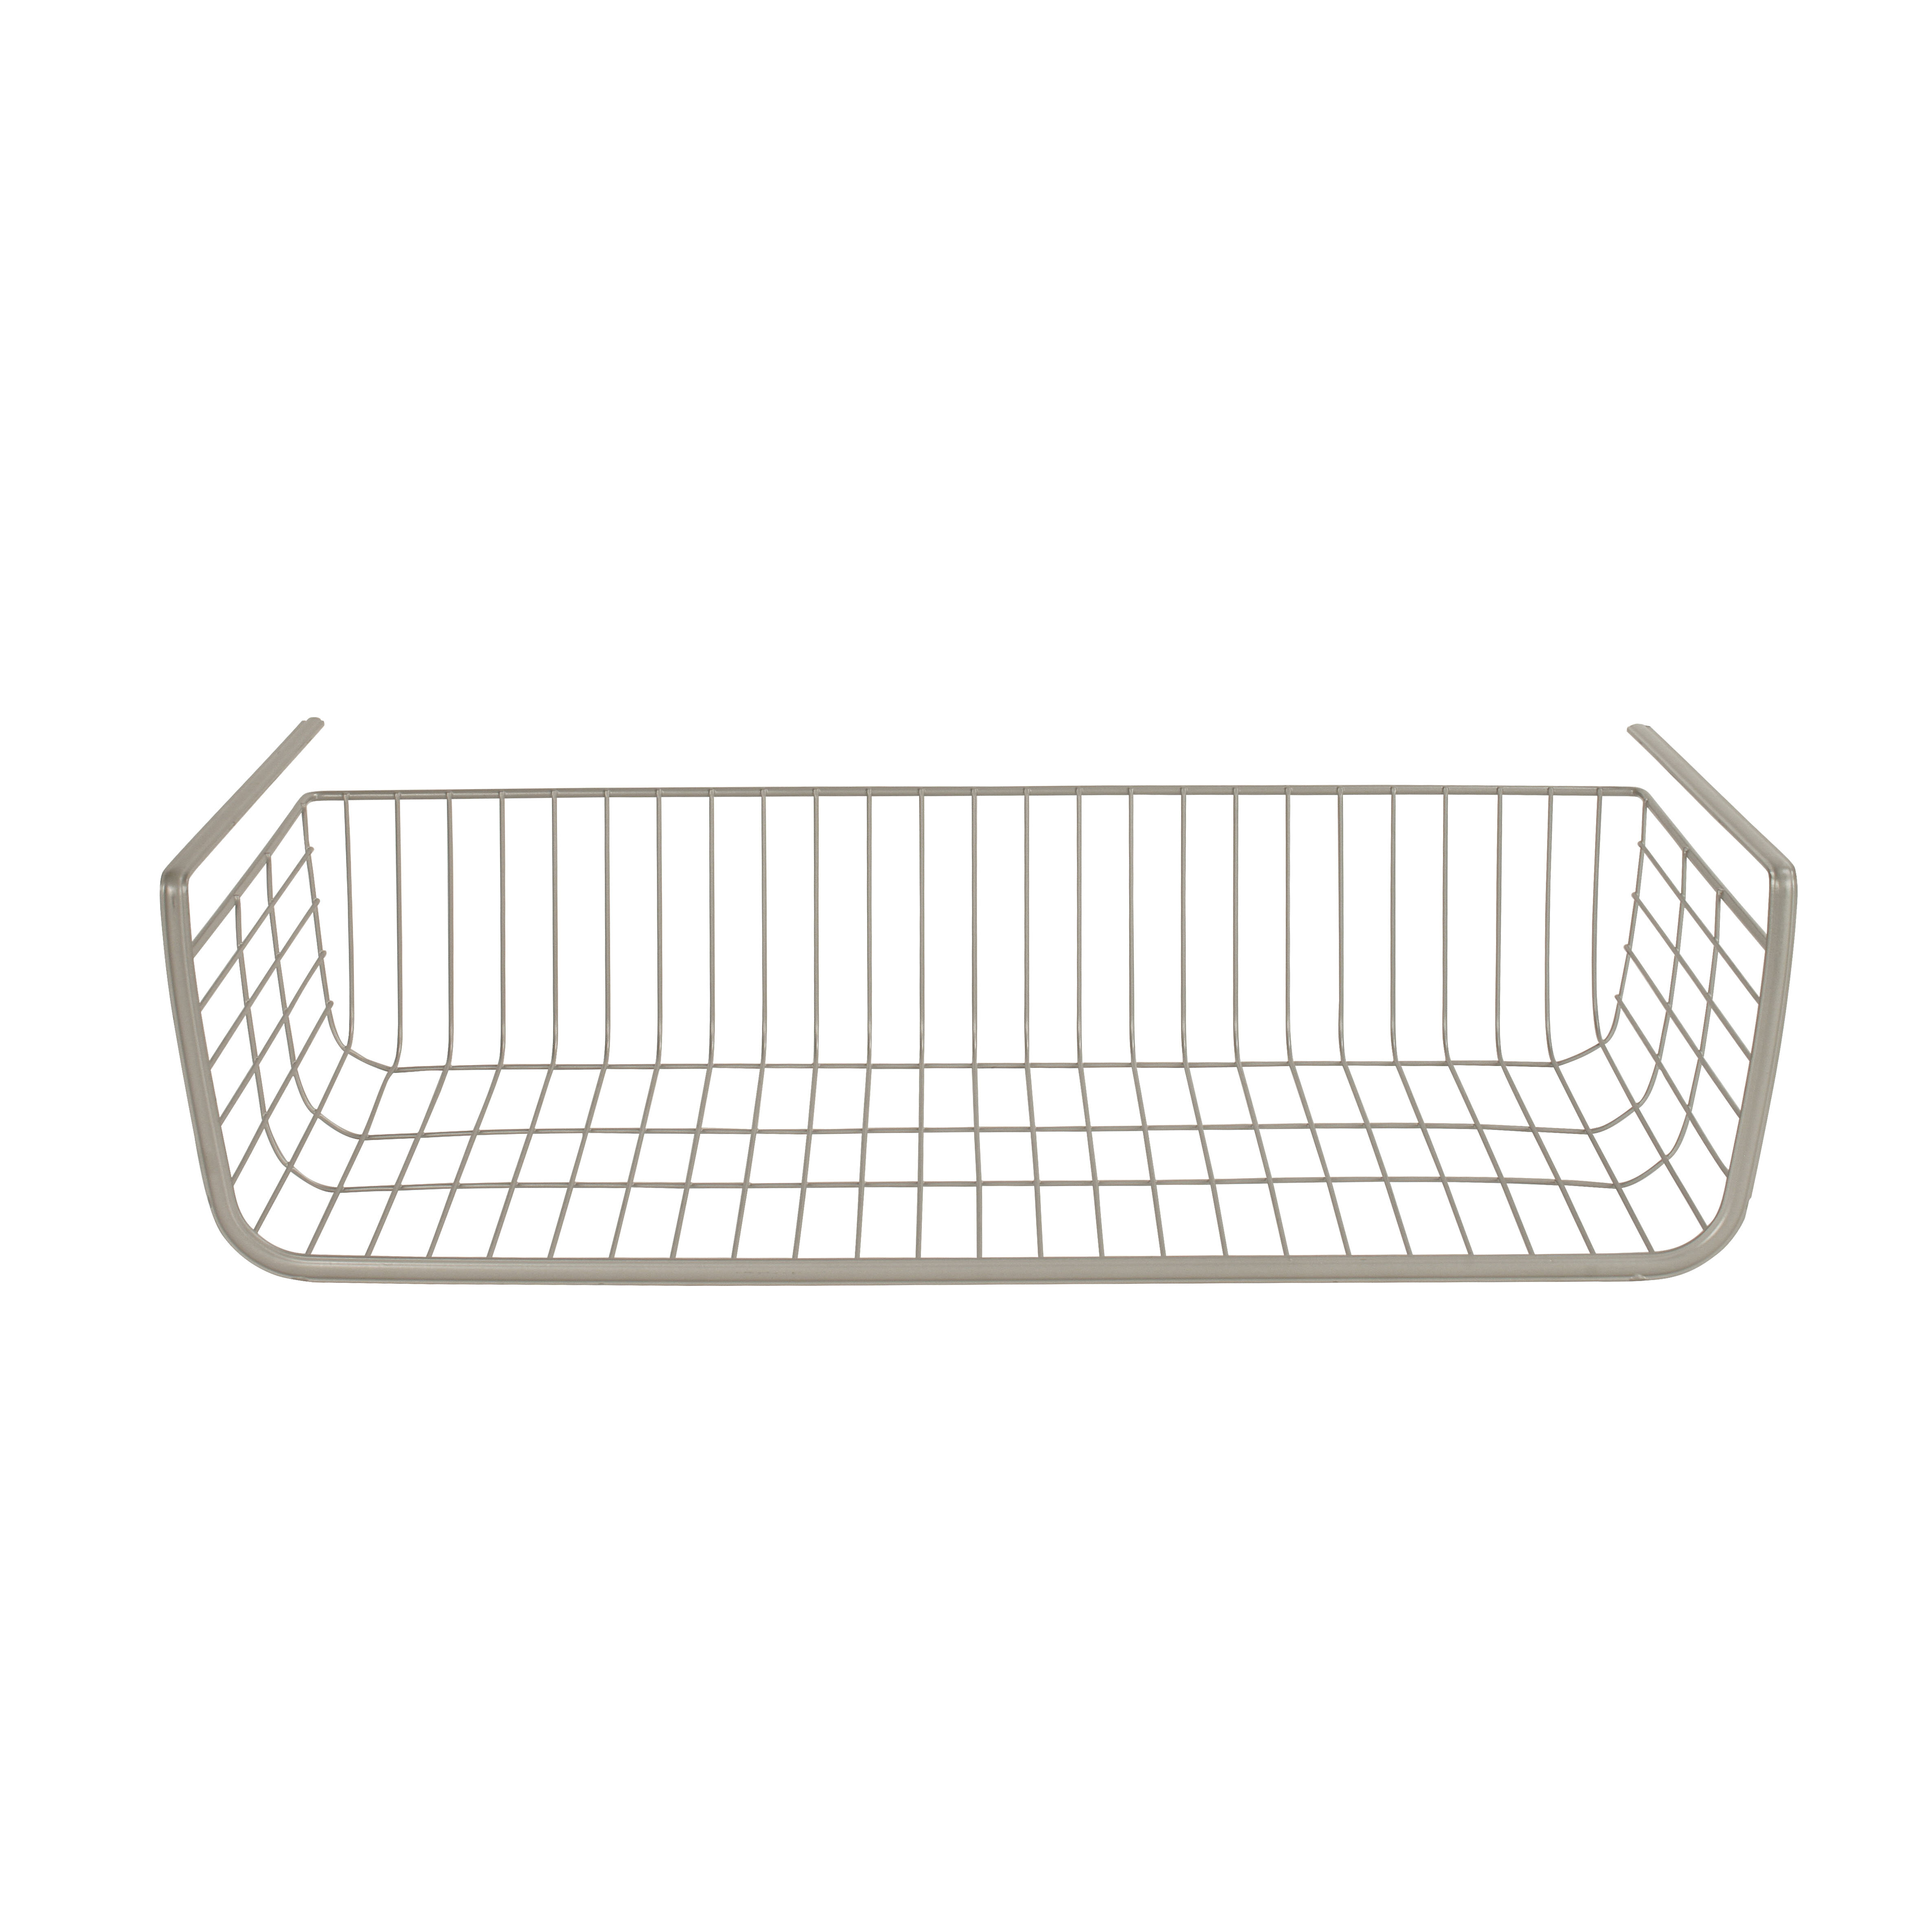 Interdesign Bronze York Lyra Under Shelf Basket